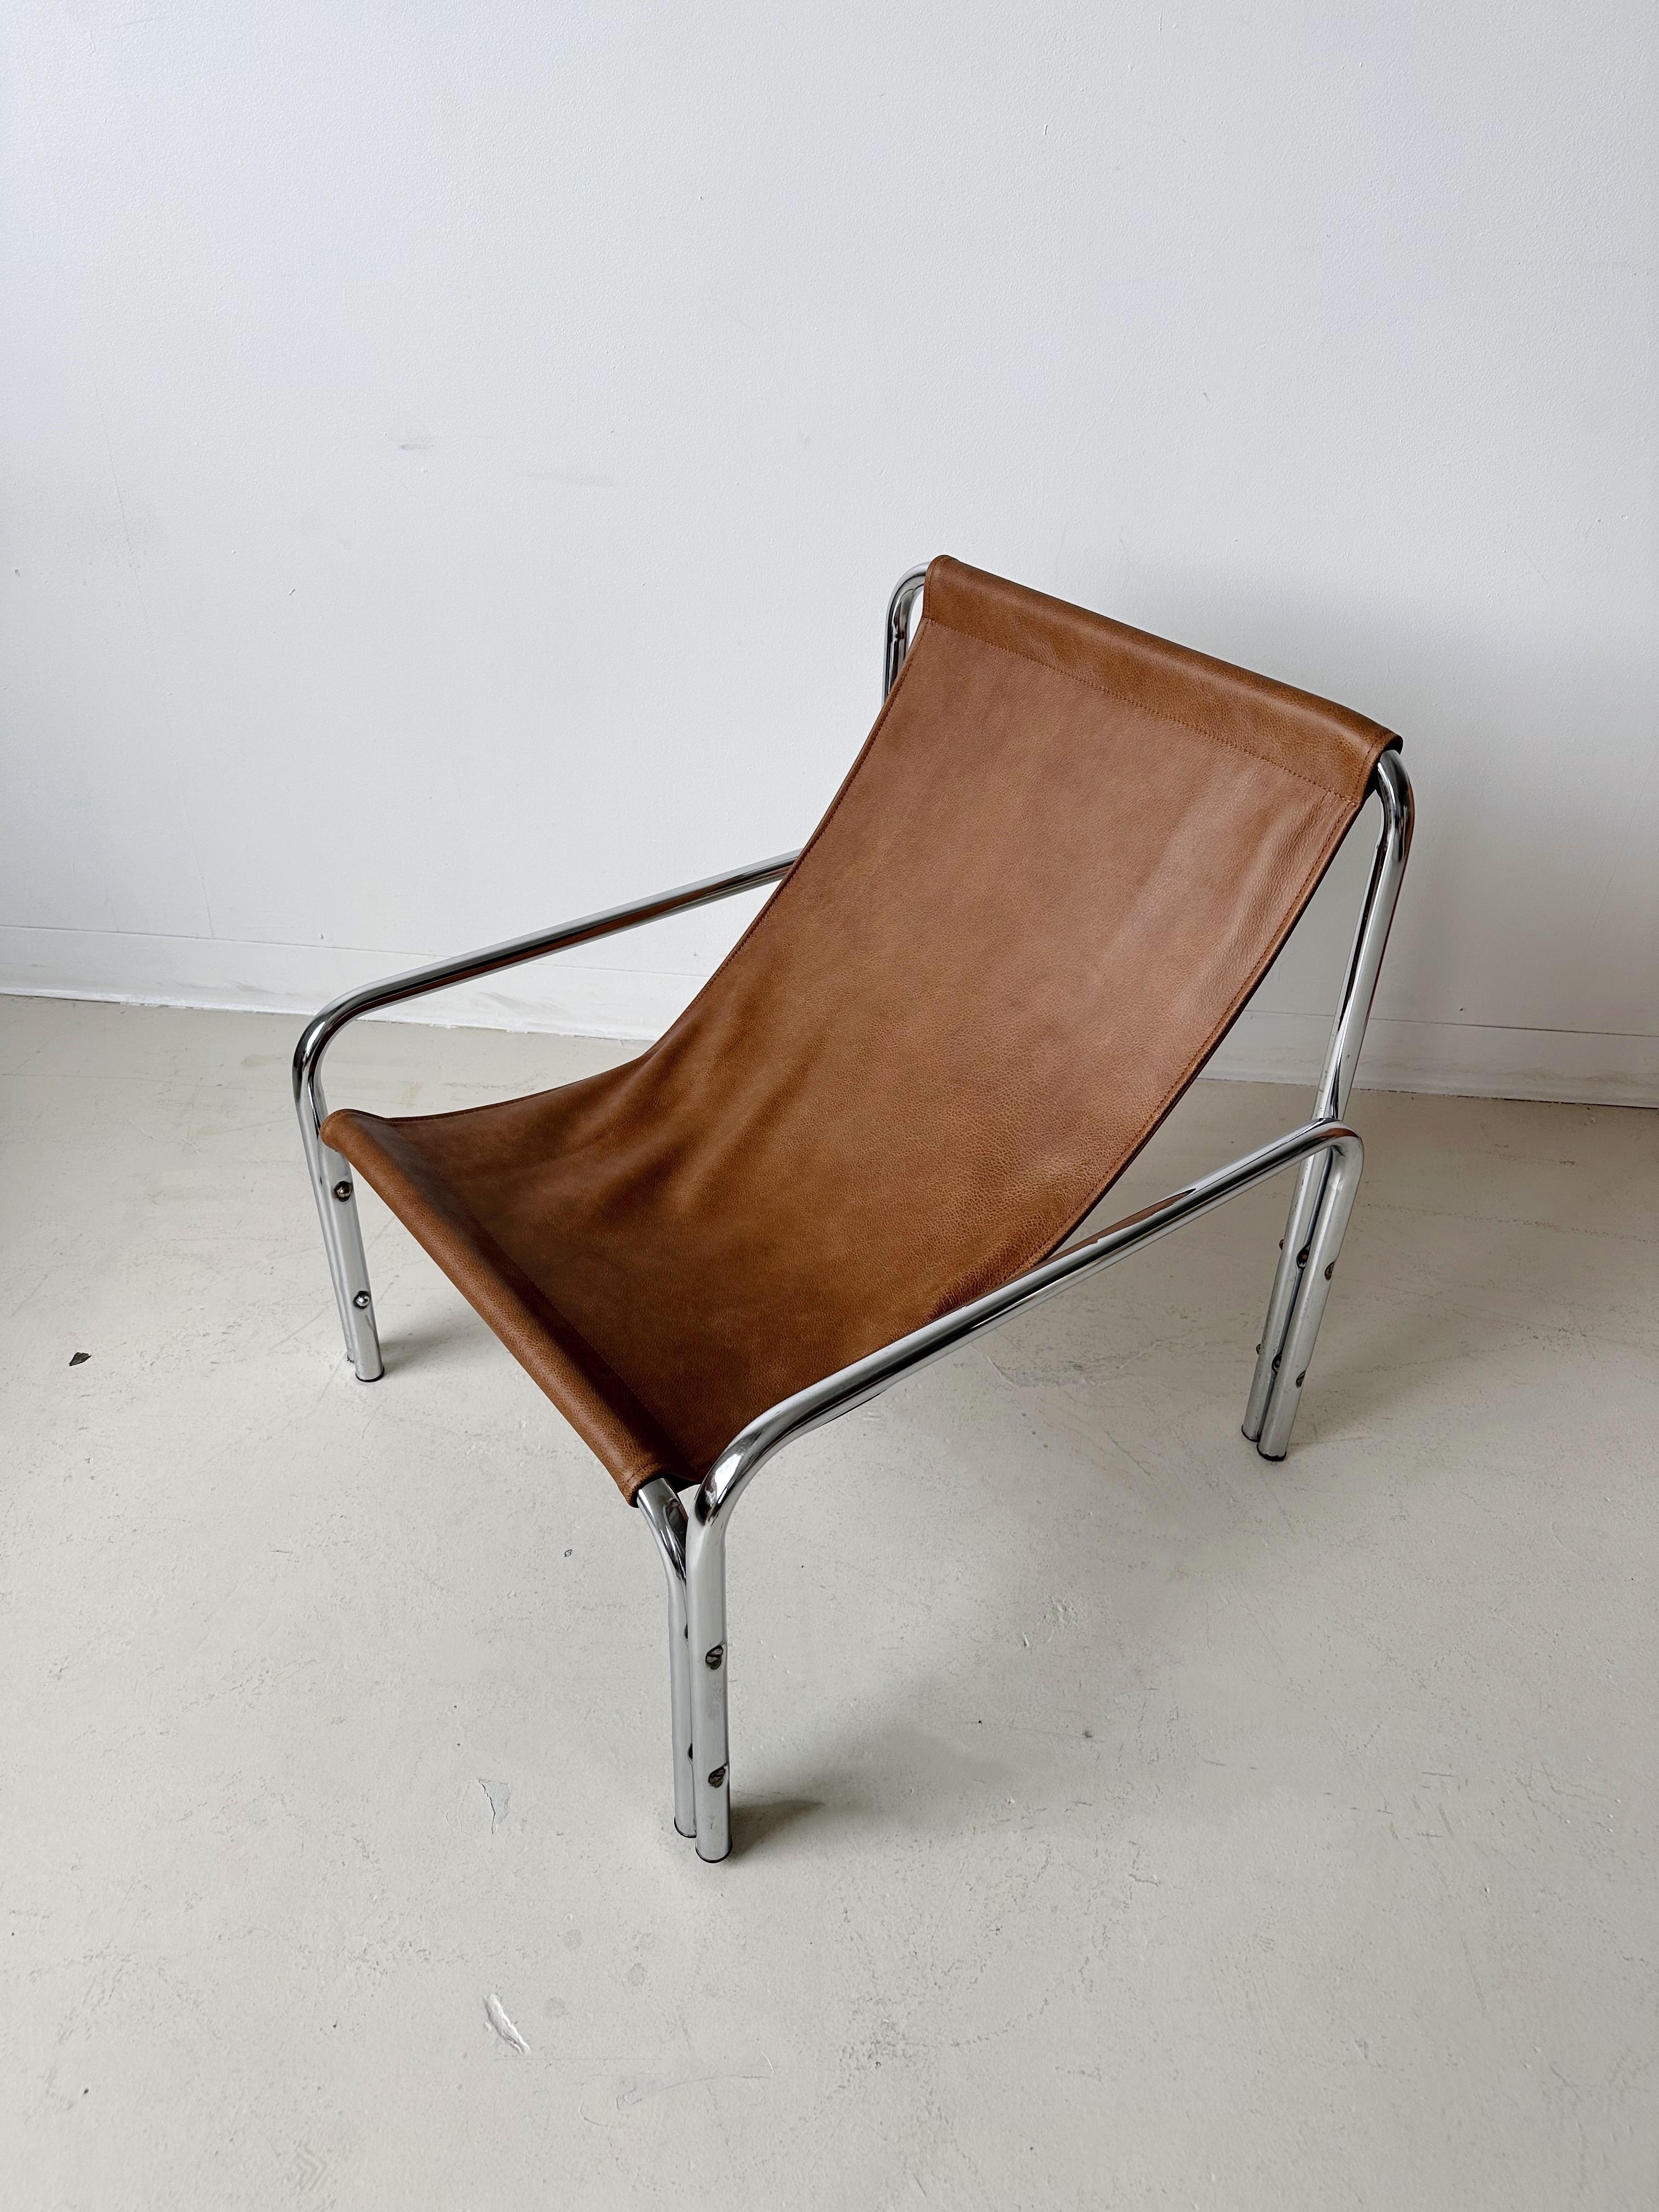 Modern Tan Leather Sling Chair with Tubular Chrome Frame